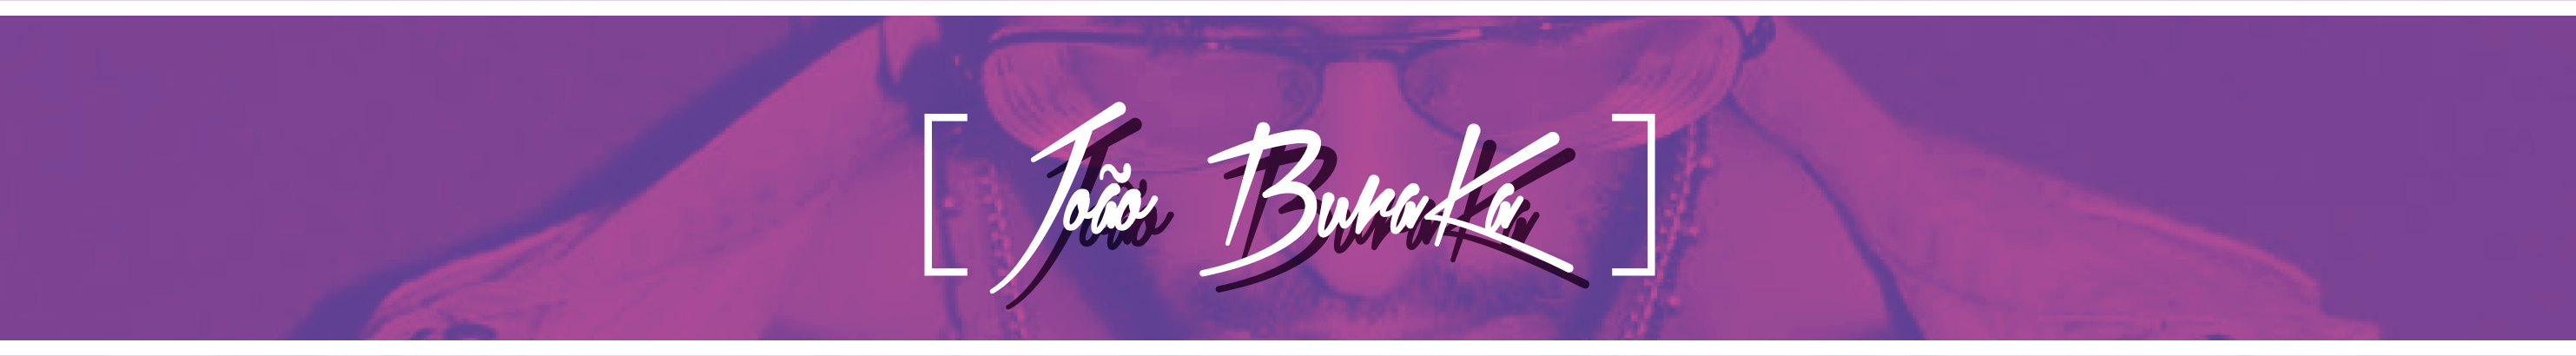 Johny BuraKa's profile banner